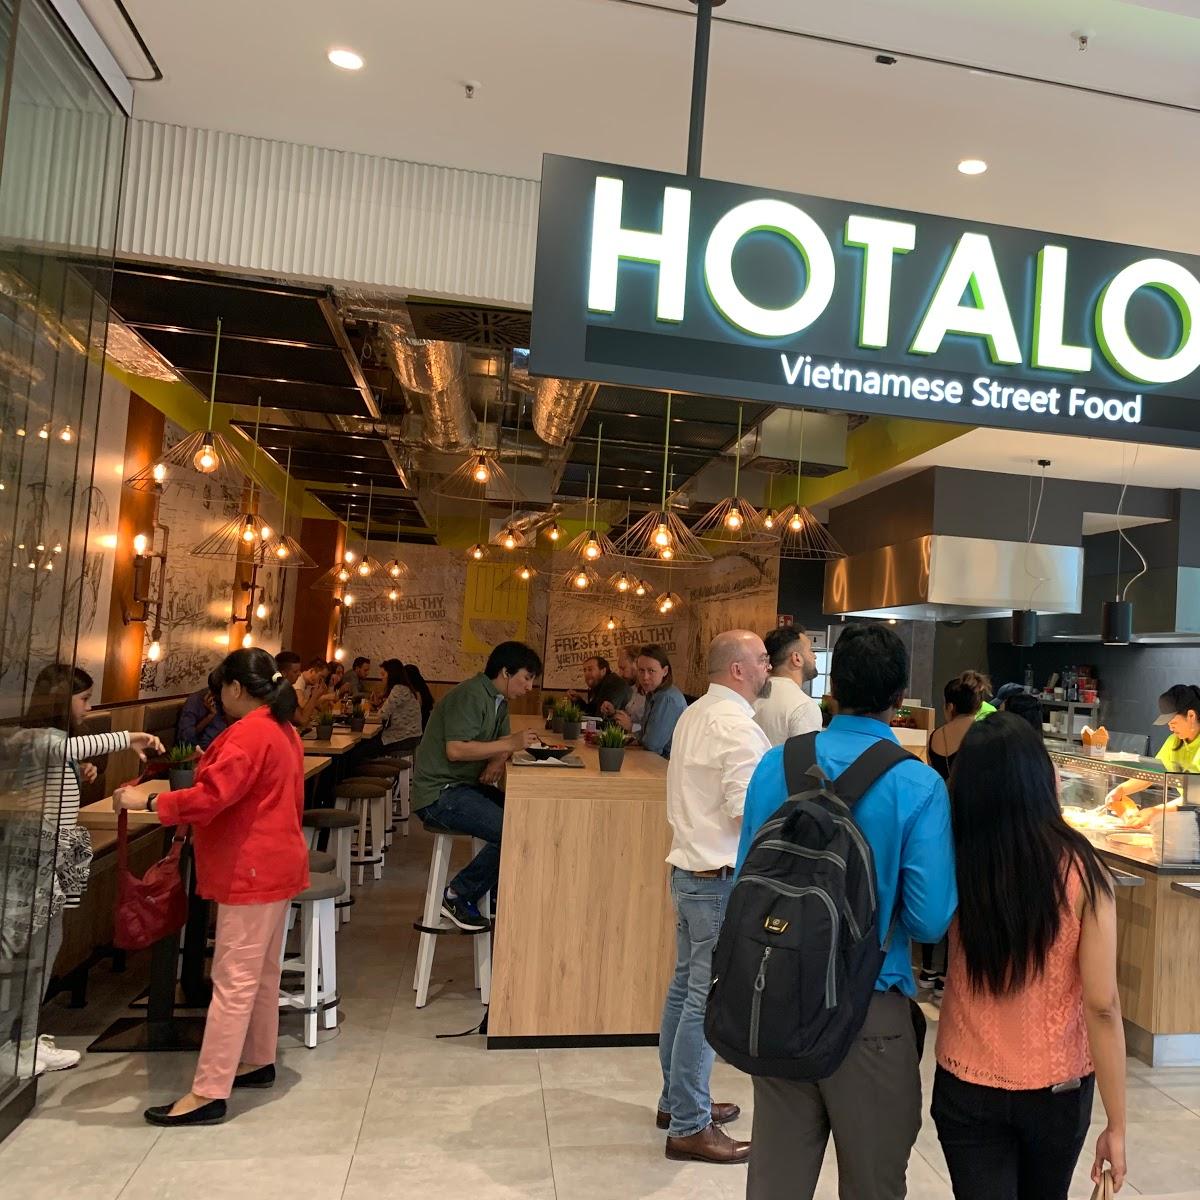 Hotalo Vietnamese Street Food